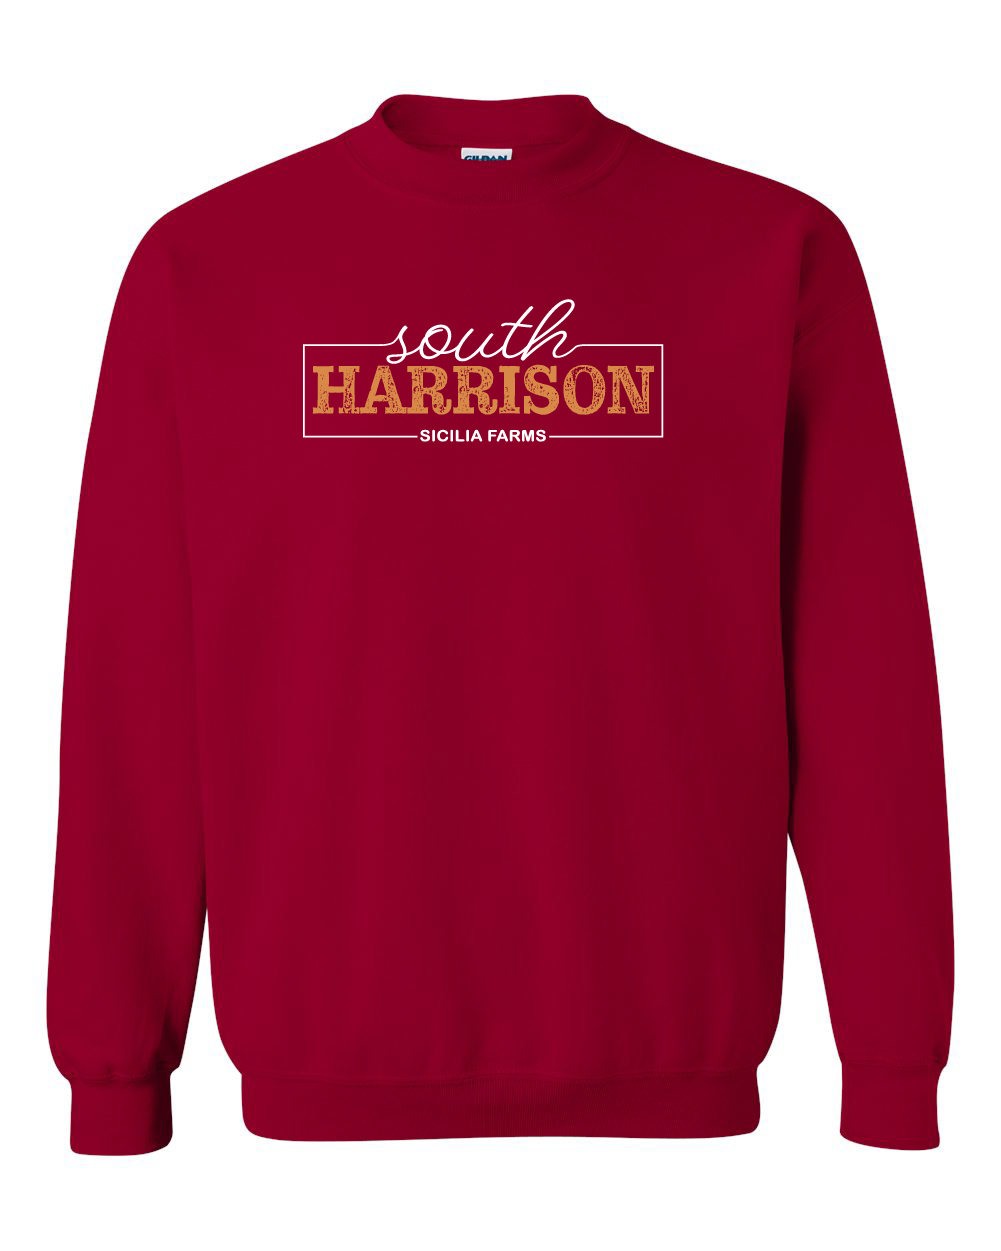 South Harrison - Heavy Blend Crewneck Sweatshirt